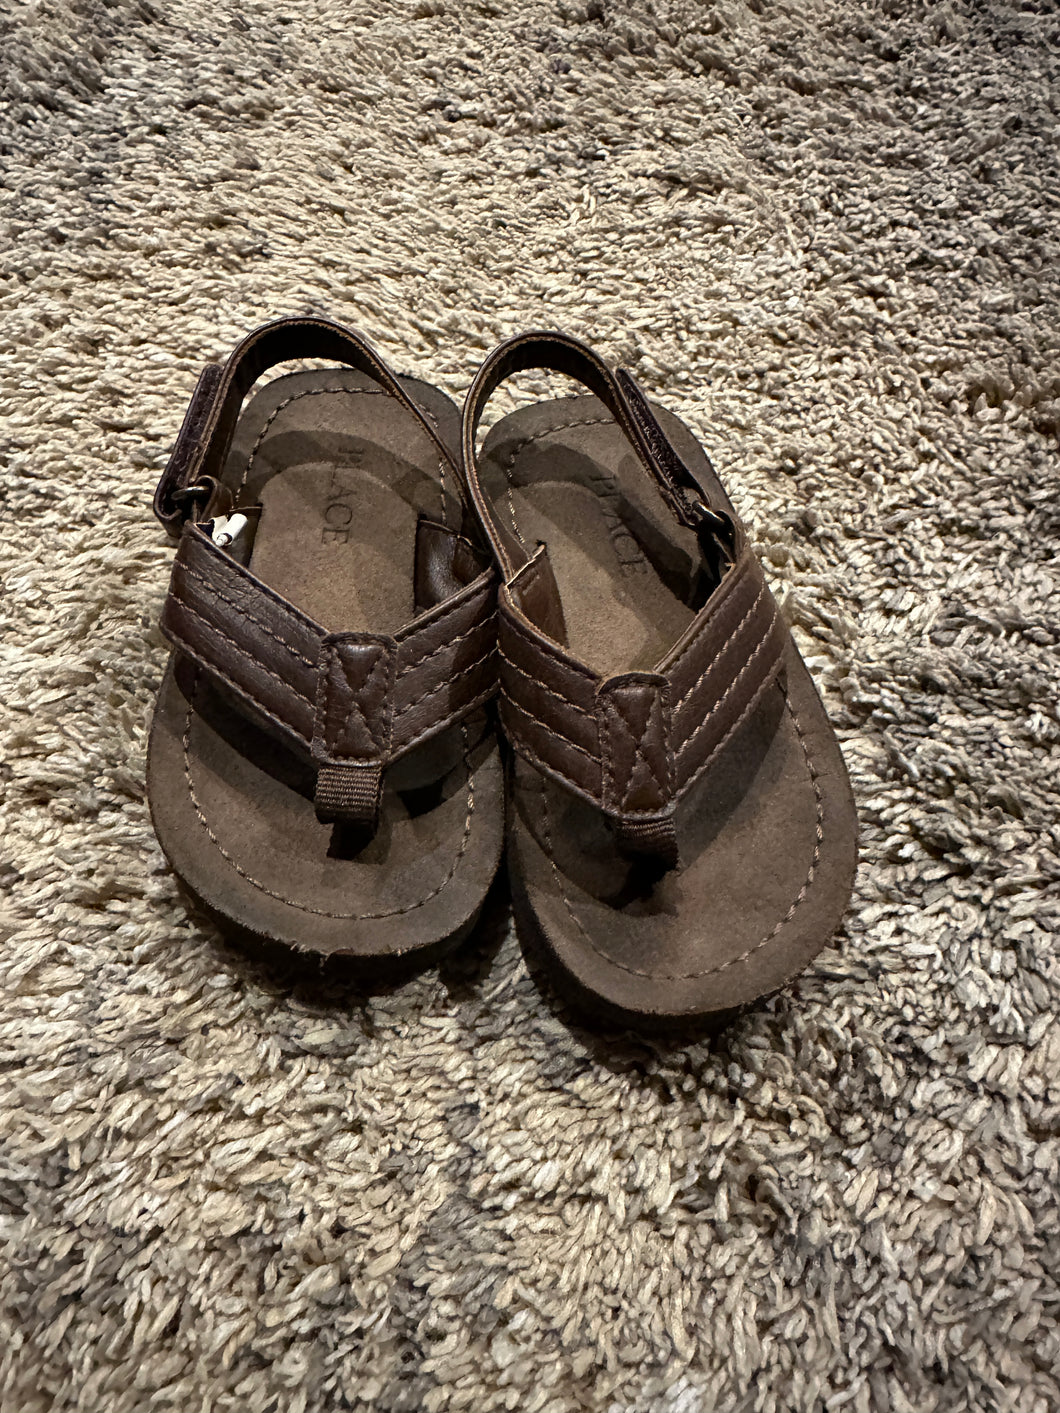 Children's Place - Size 6/7 Brown Sandal - Good condition 6